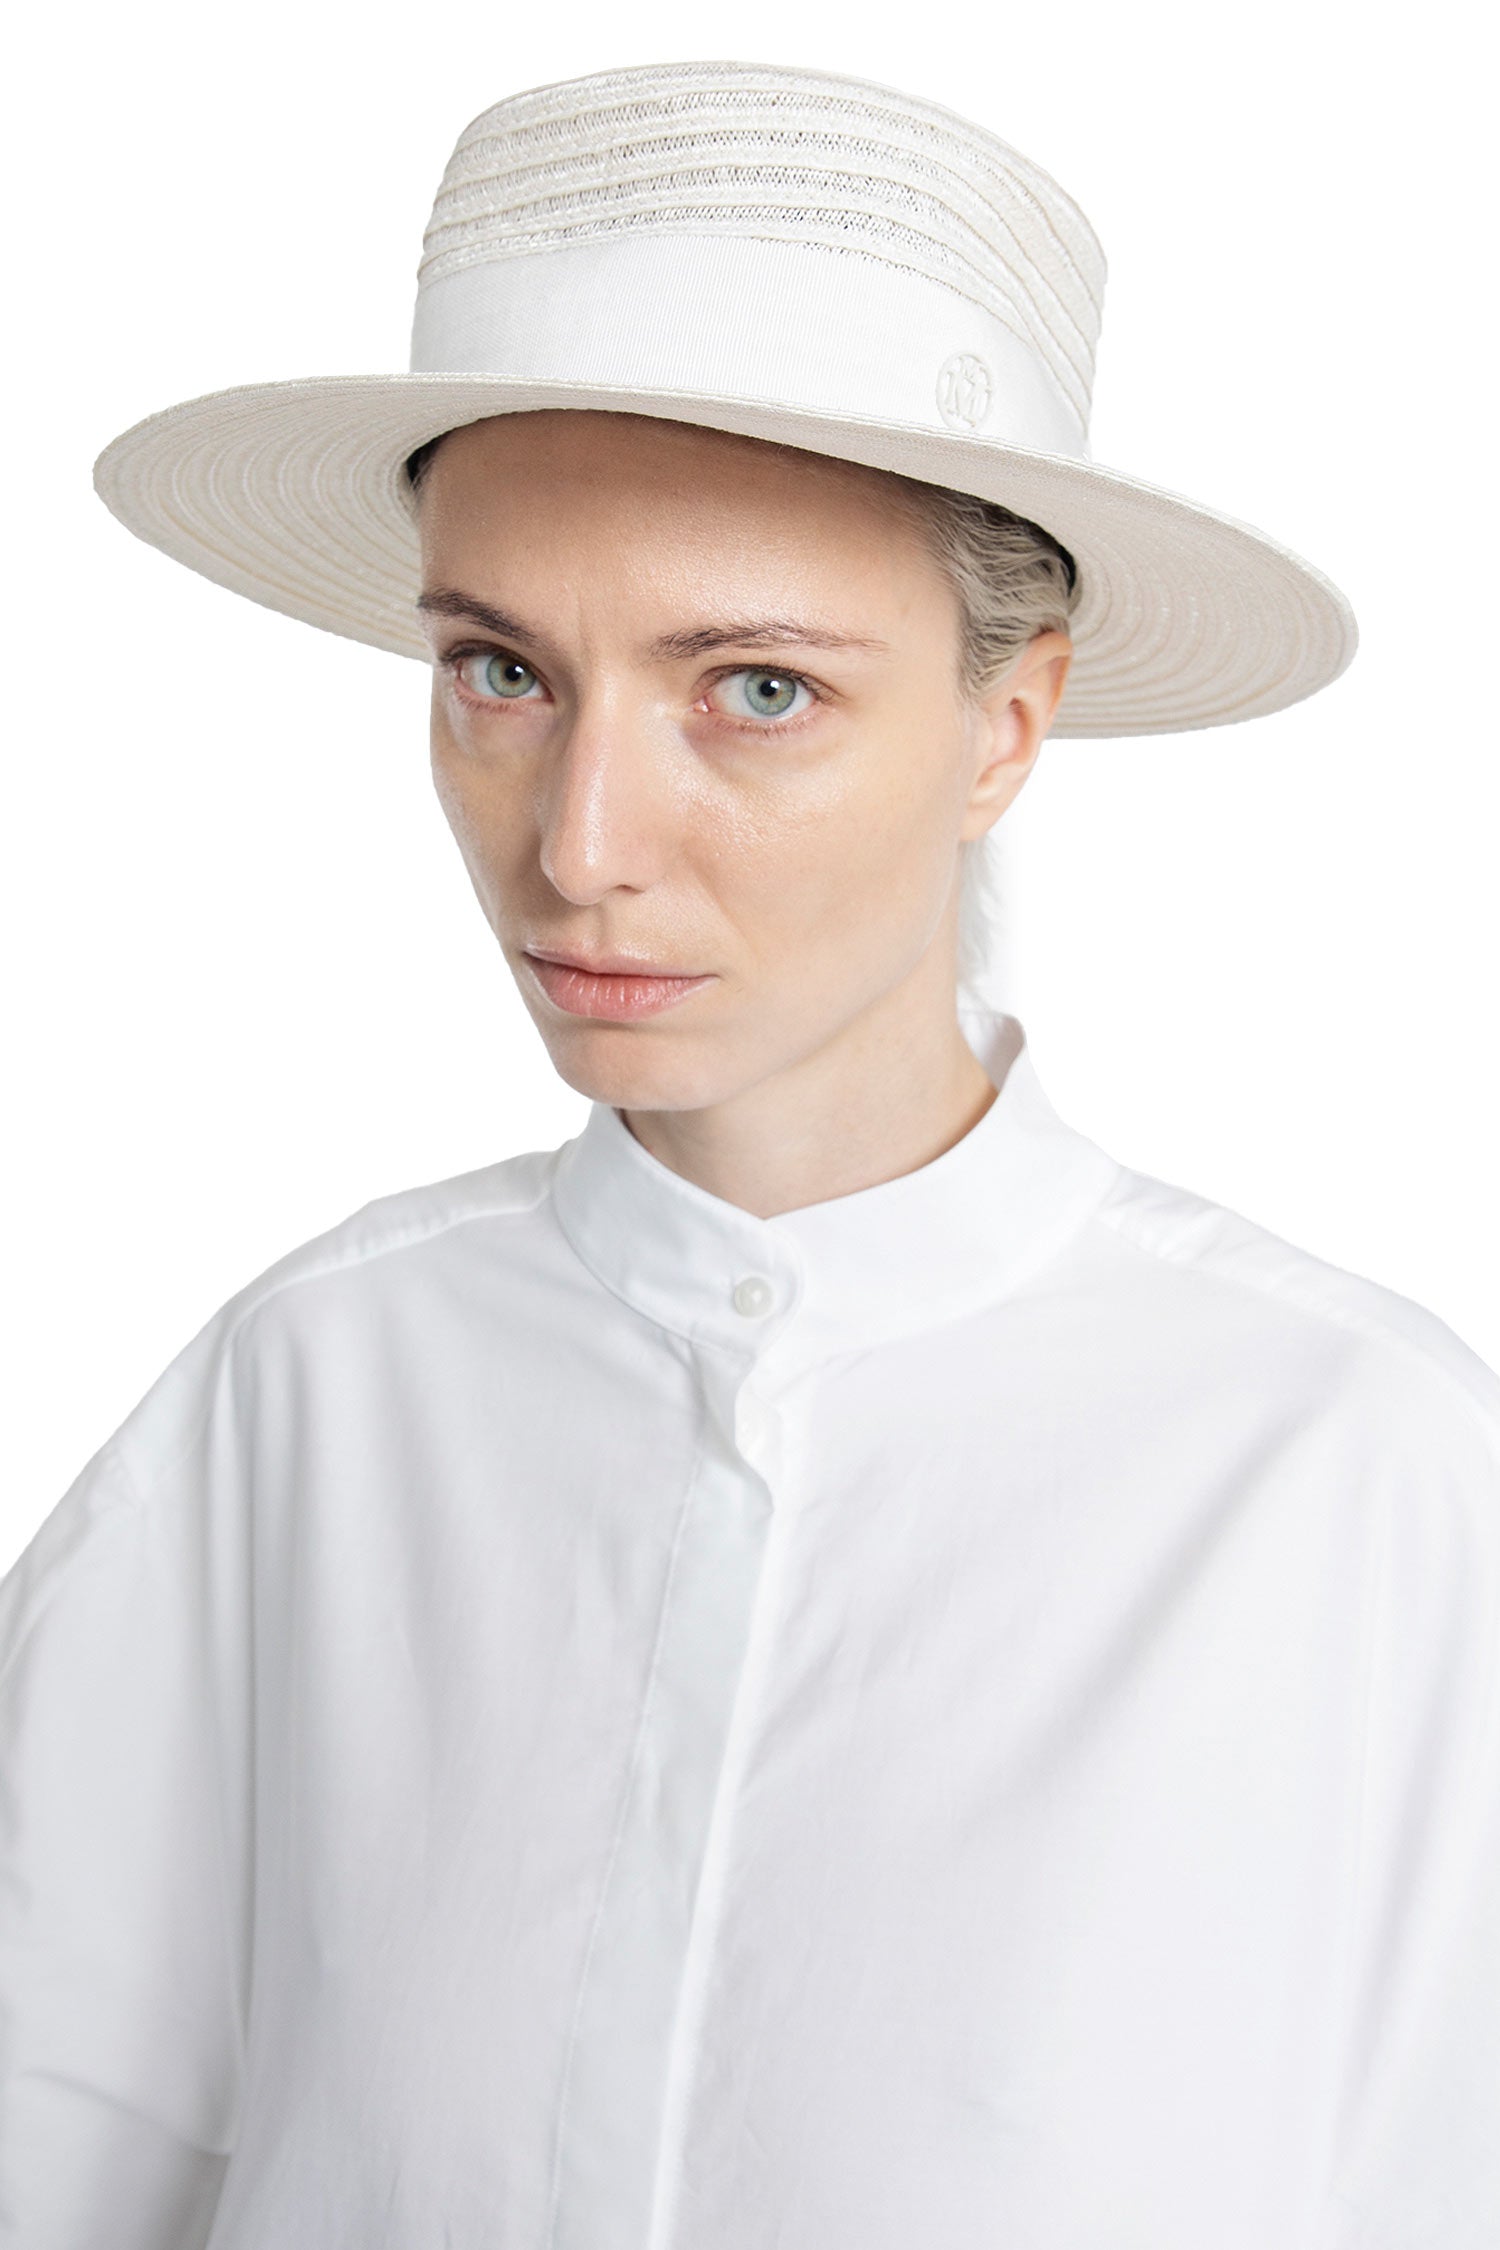 MAISON MICHEL WOMAN WHITE HATS